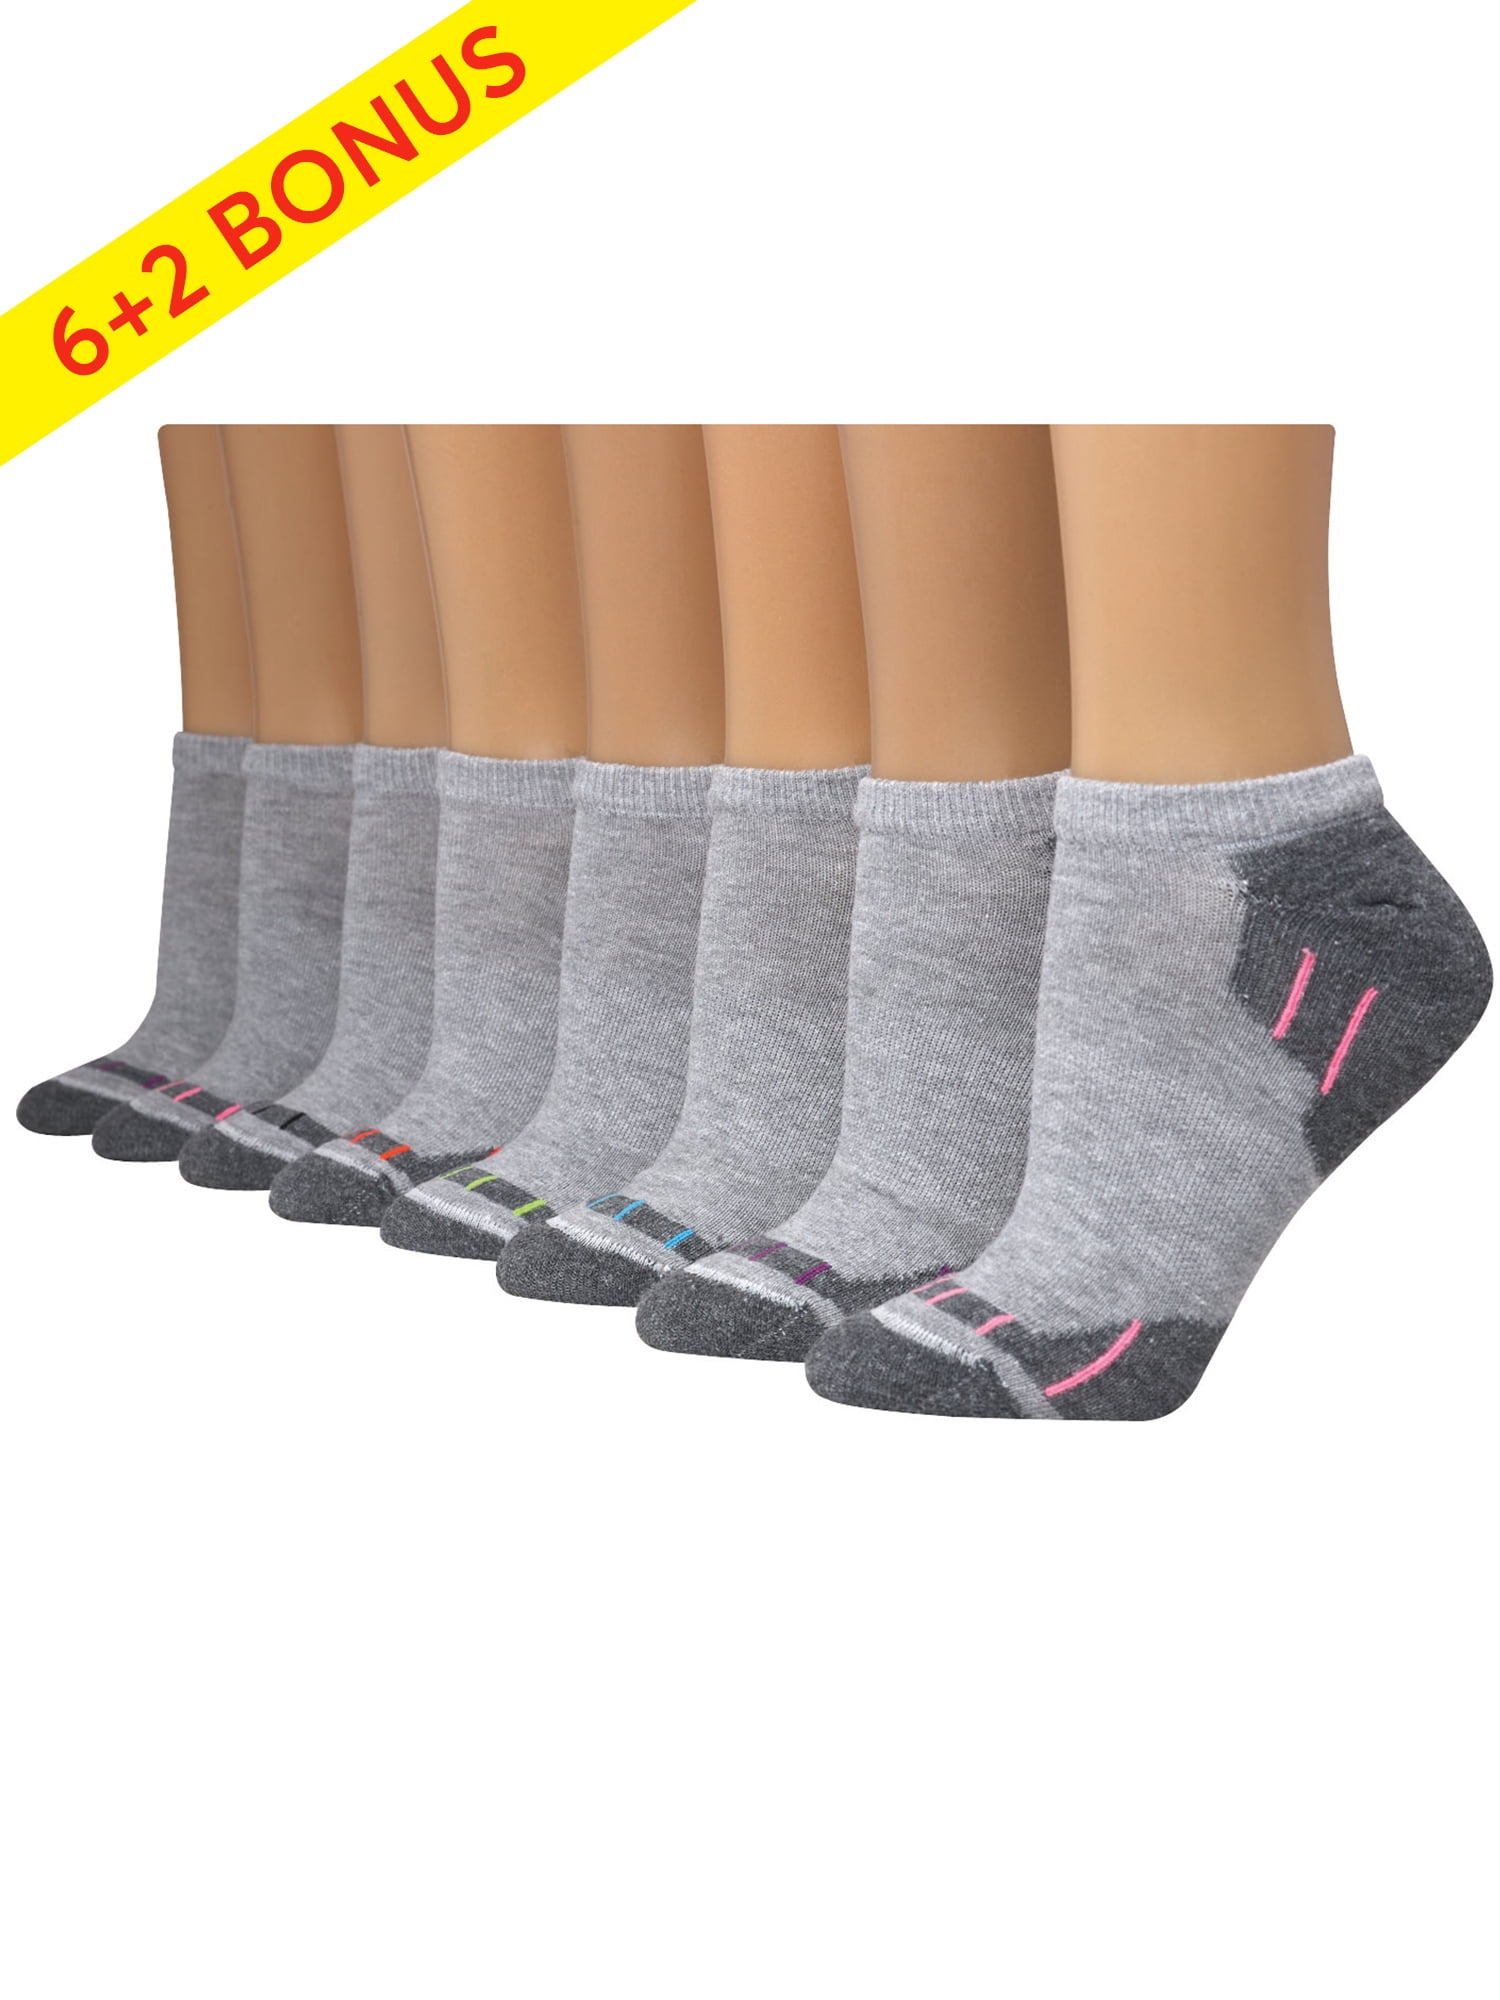 Hanes Womens' Sport Cool Comfort No Show Socks, 6+2 bonus pack - Walmart.com